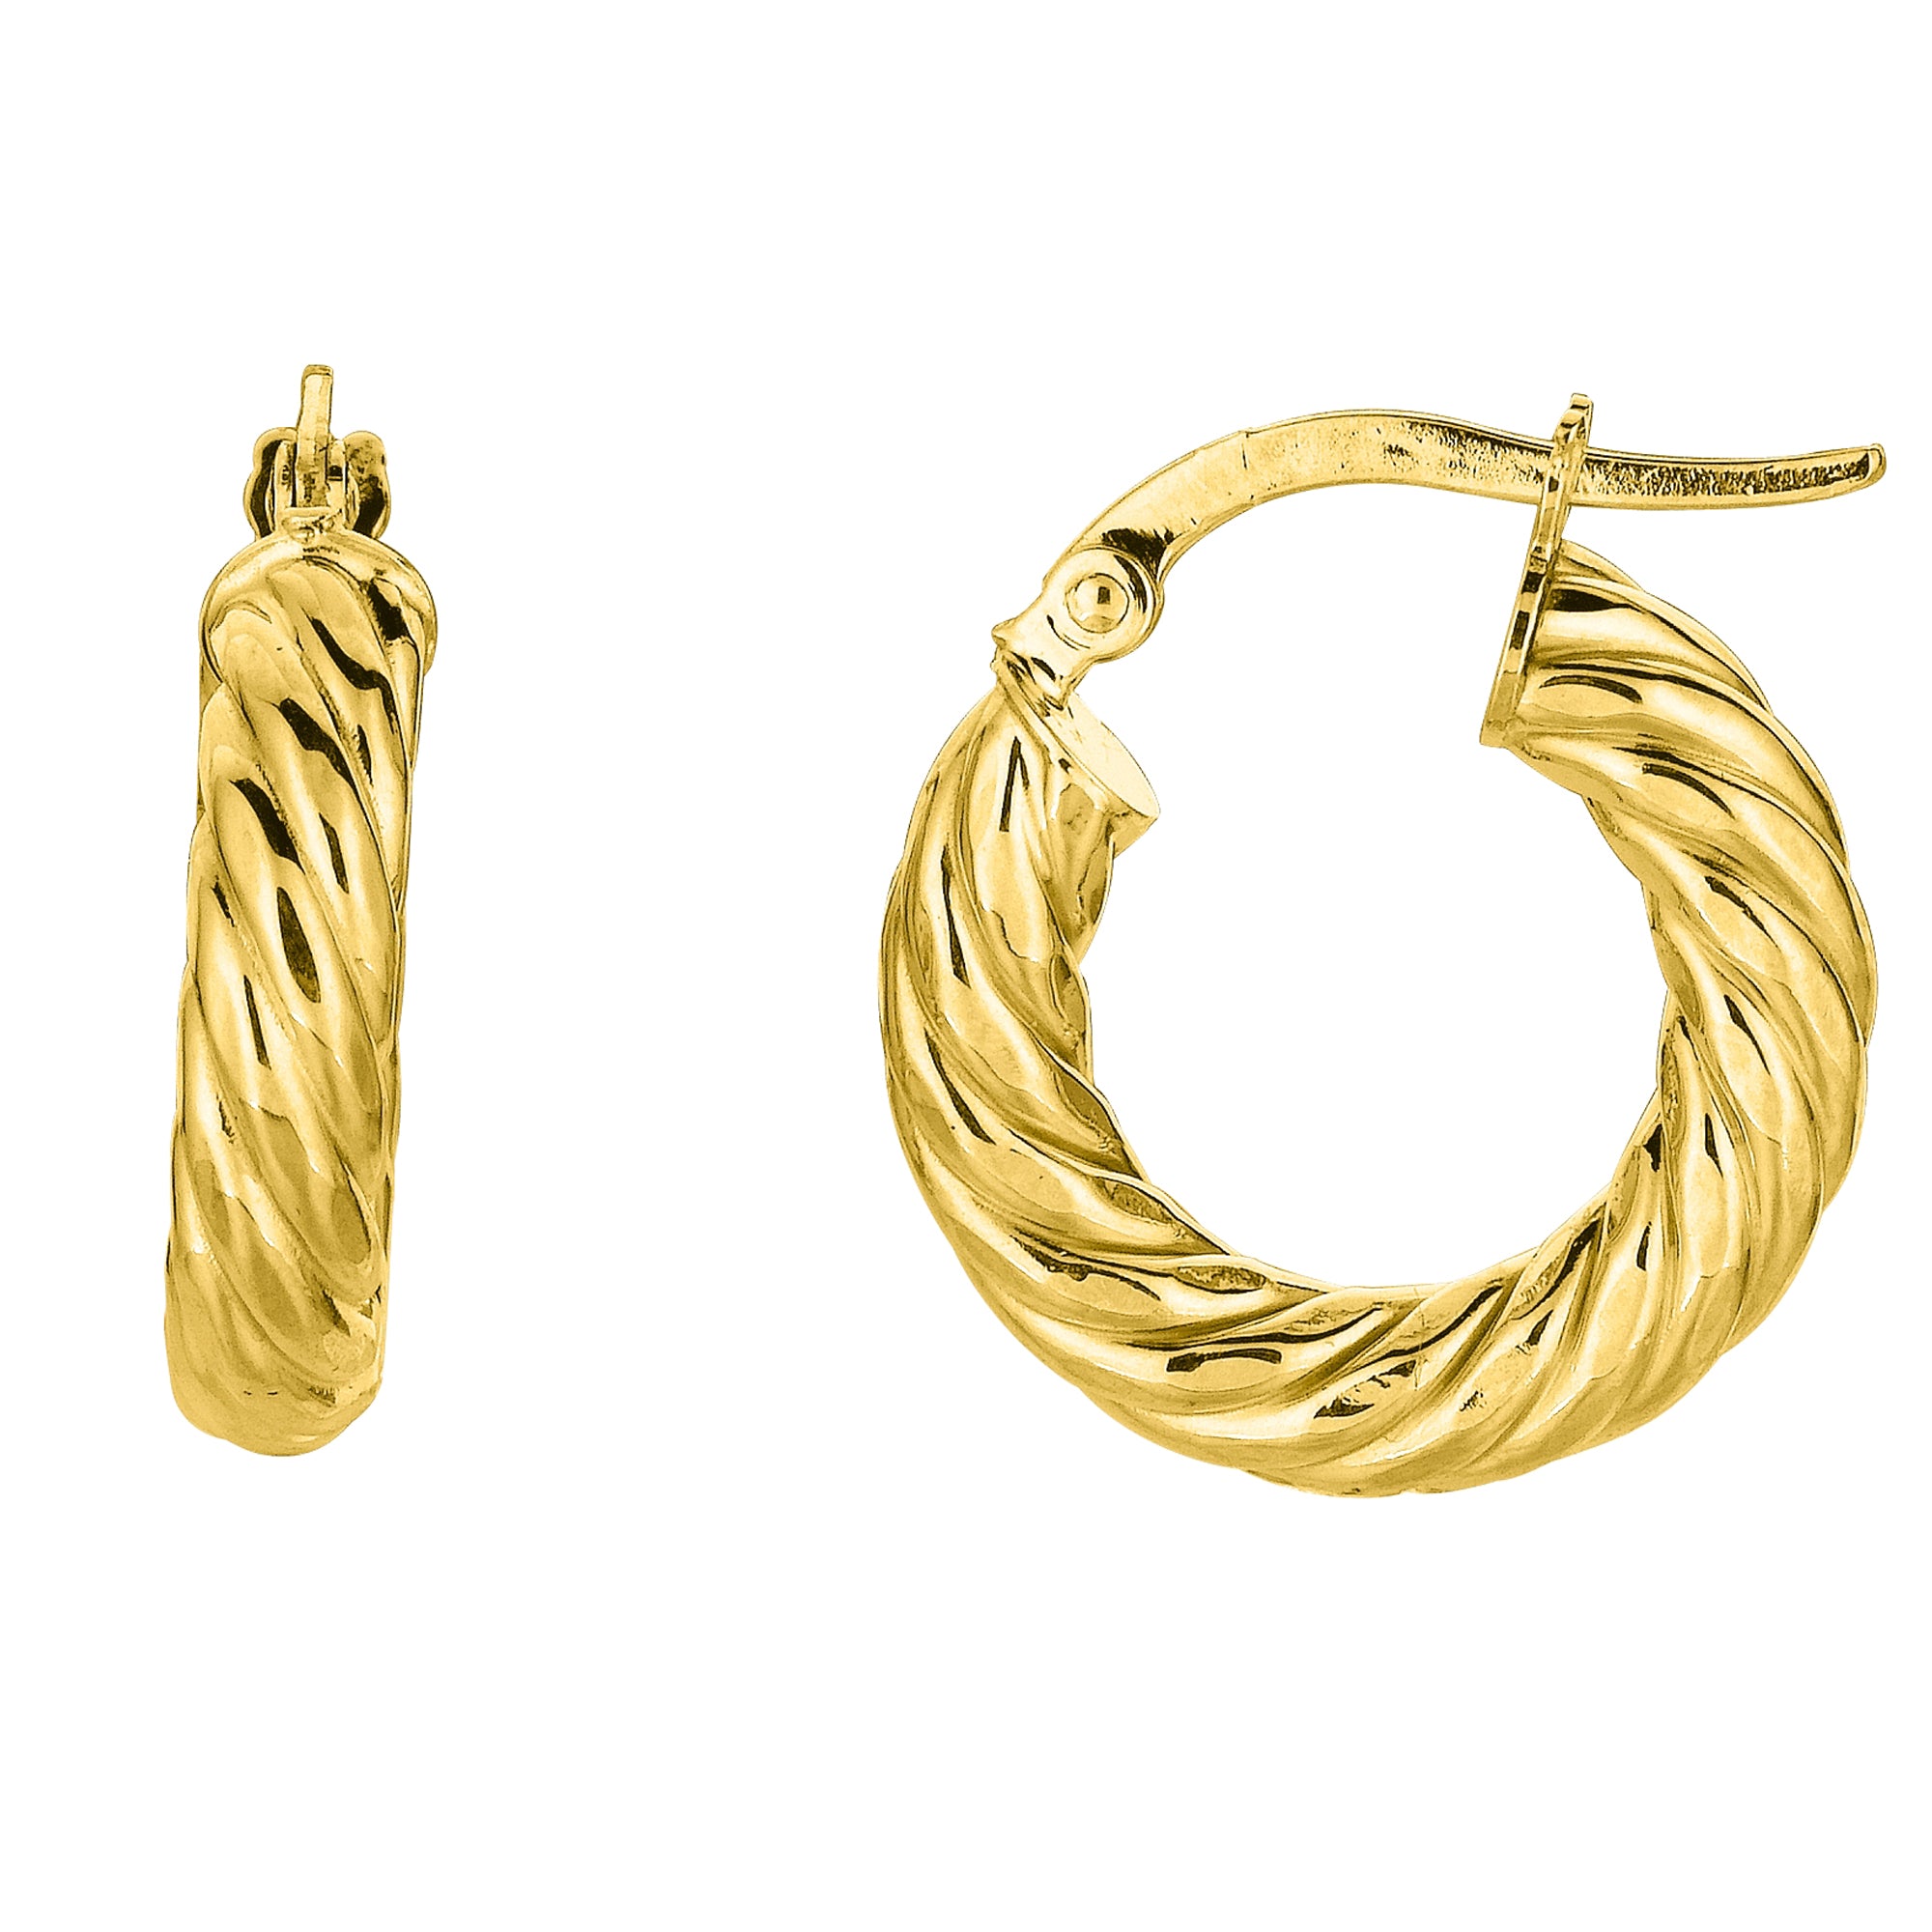 14K Yellow Gold Round Tube Twists Hoop Earring, Diameter 10mm fine designer jewelry for men and women